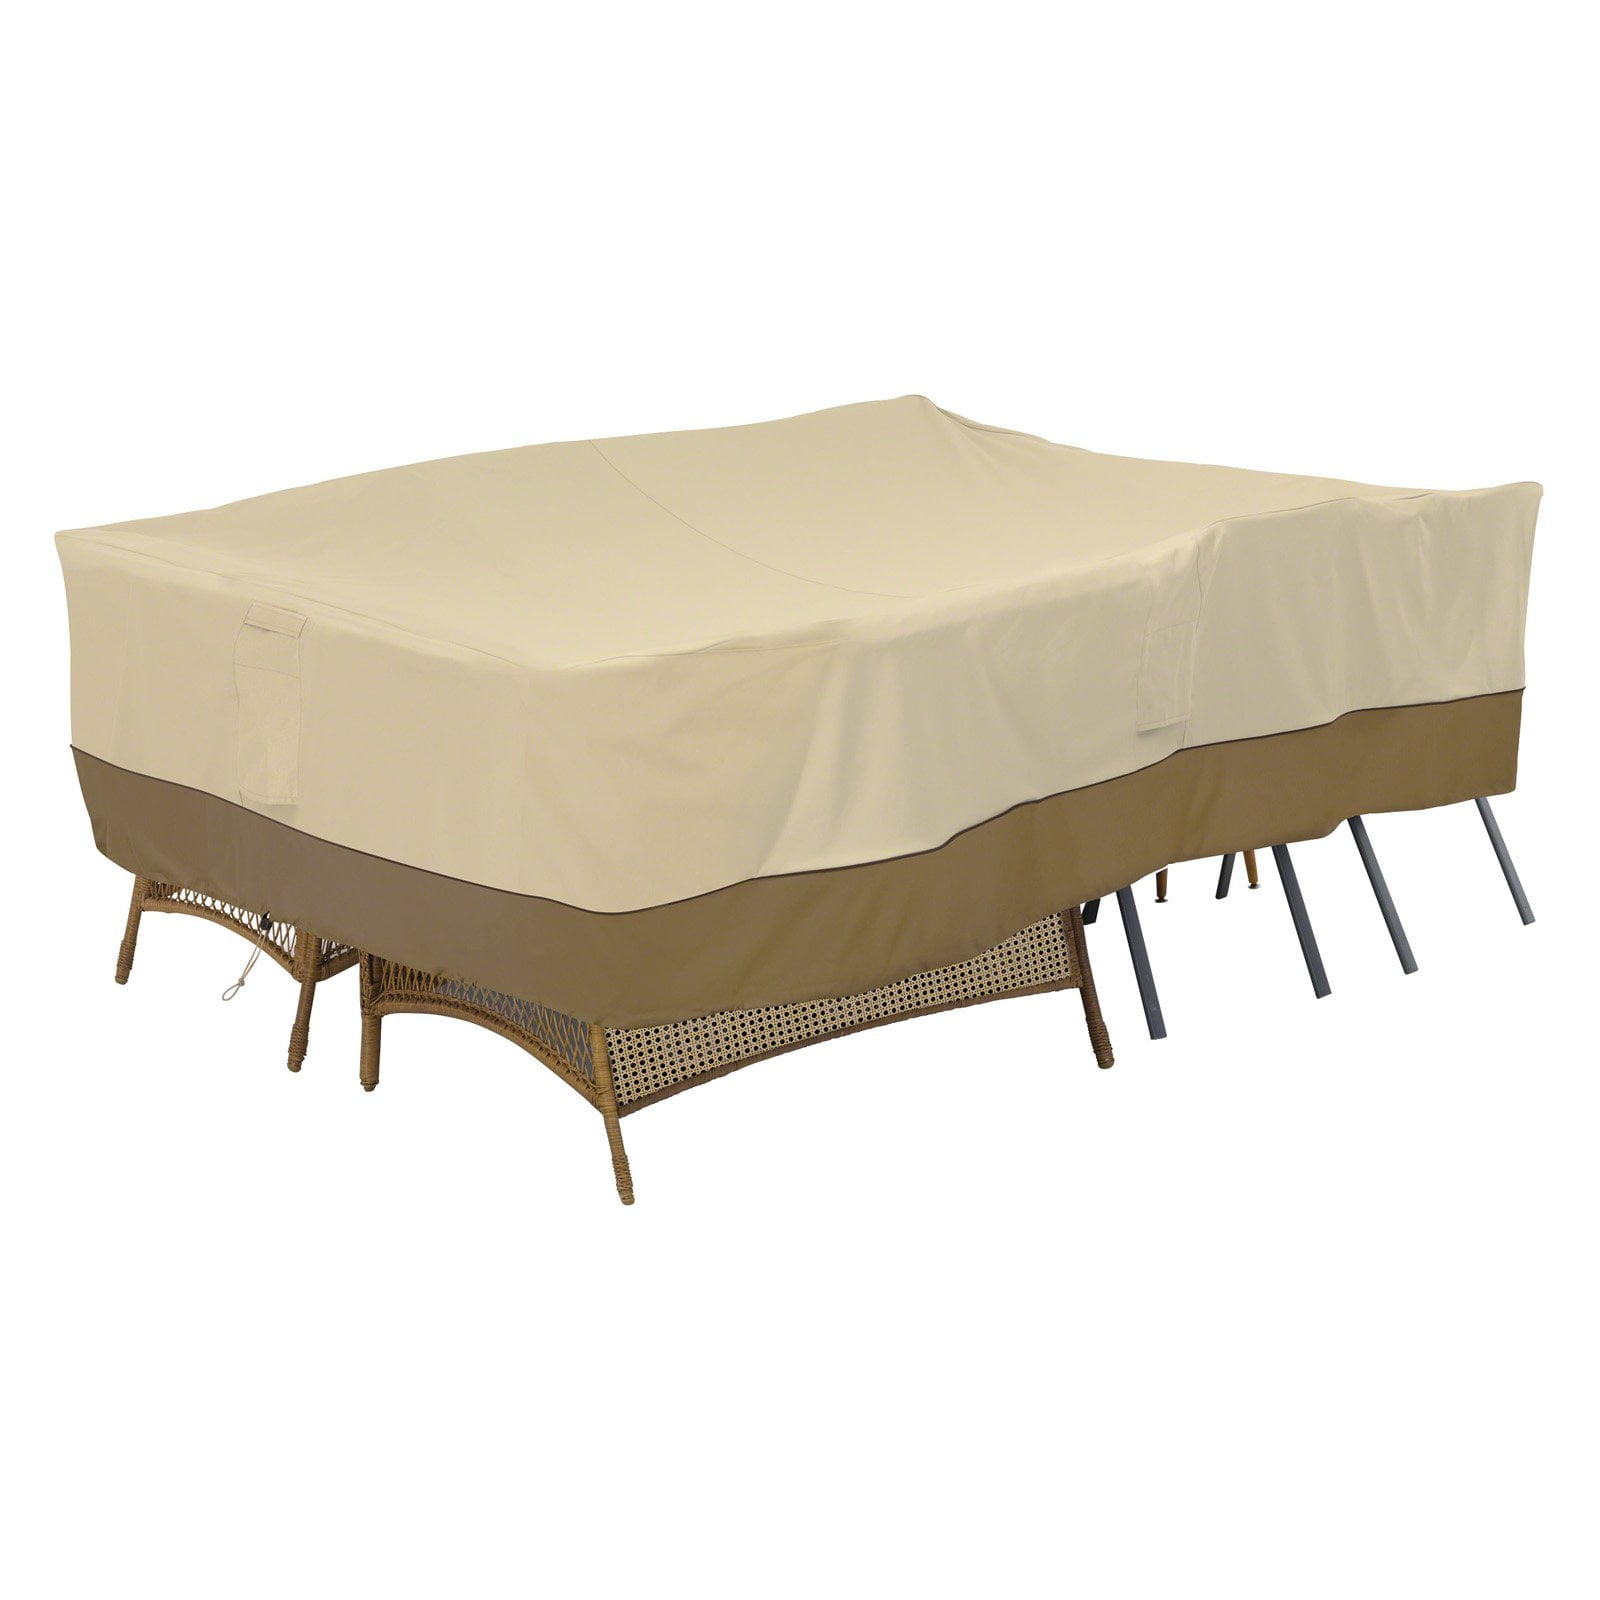 Classic Accessories Terrazzo 80 x 60 Sectional Sofa/General Purpose Patio Furniture Cover